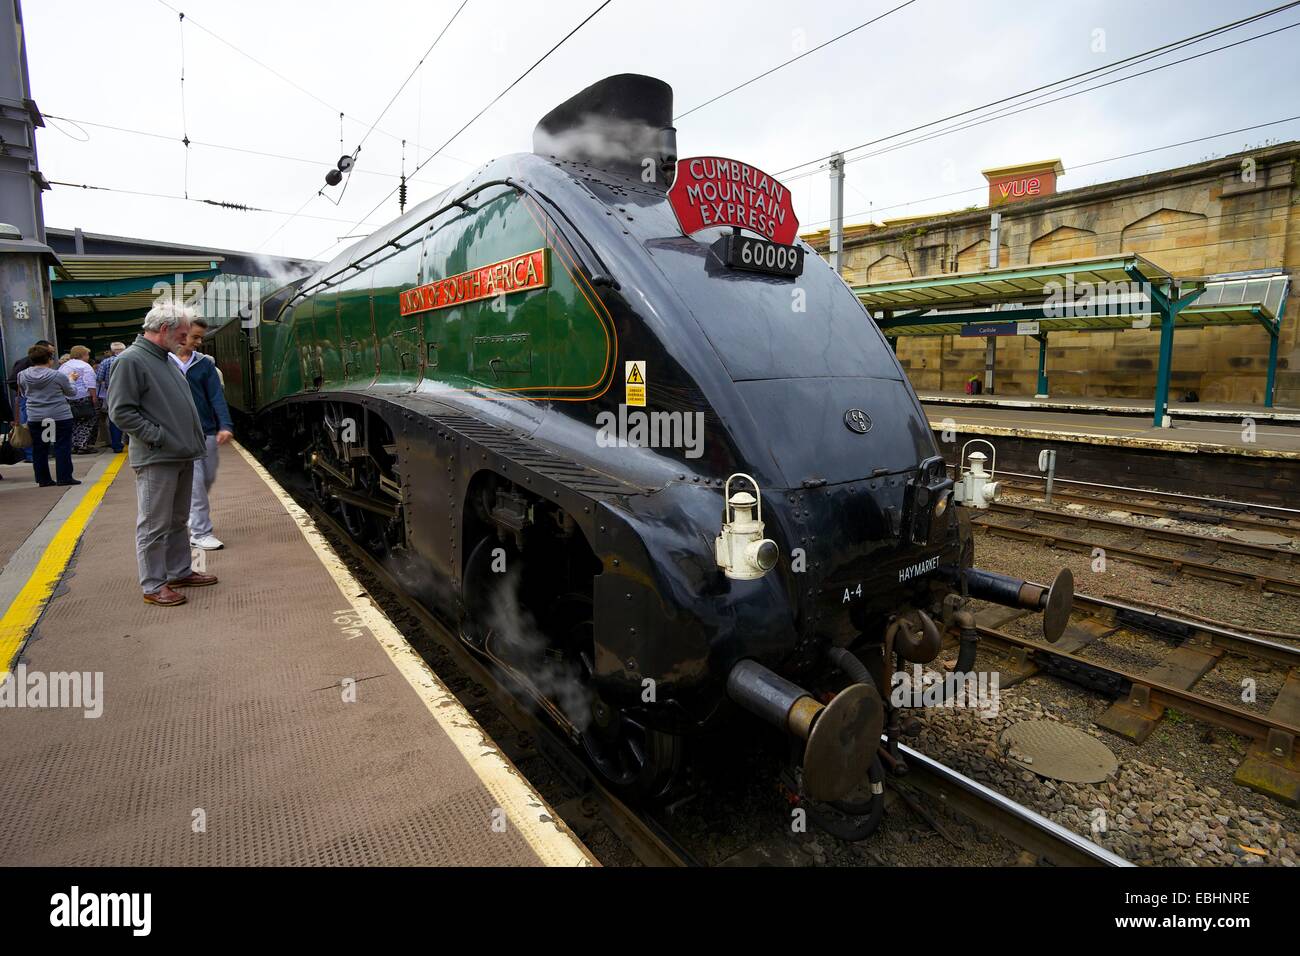 Trainspoters by Union of South Africa sream train. Carlisle Railway Station. Carlisle Cumbria England UK Stock Photo